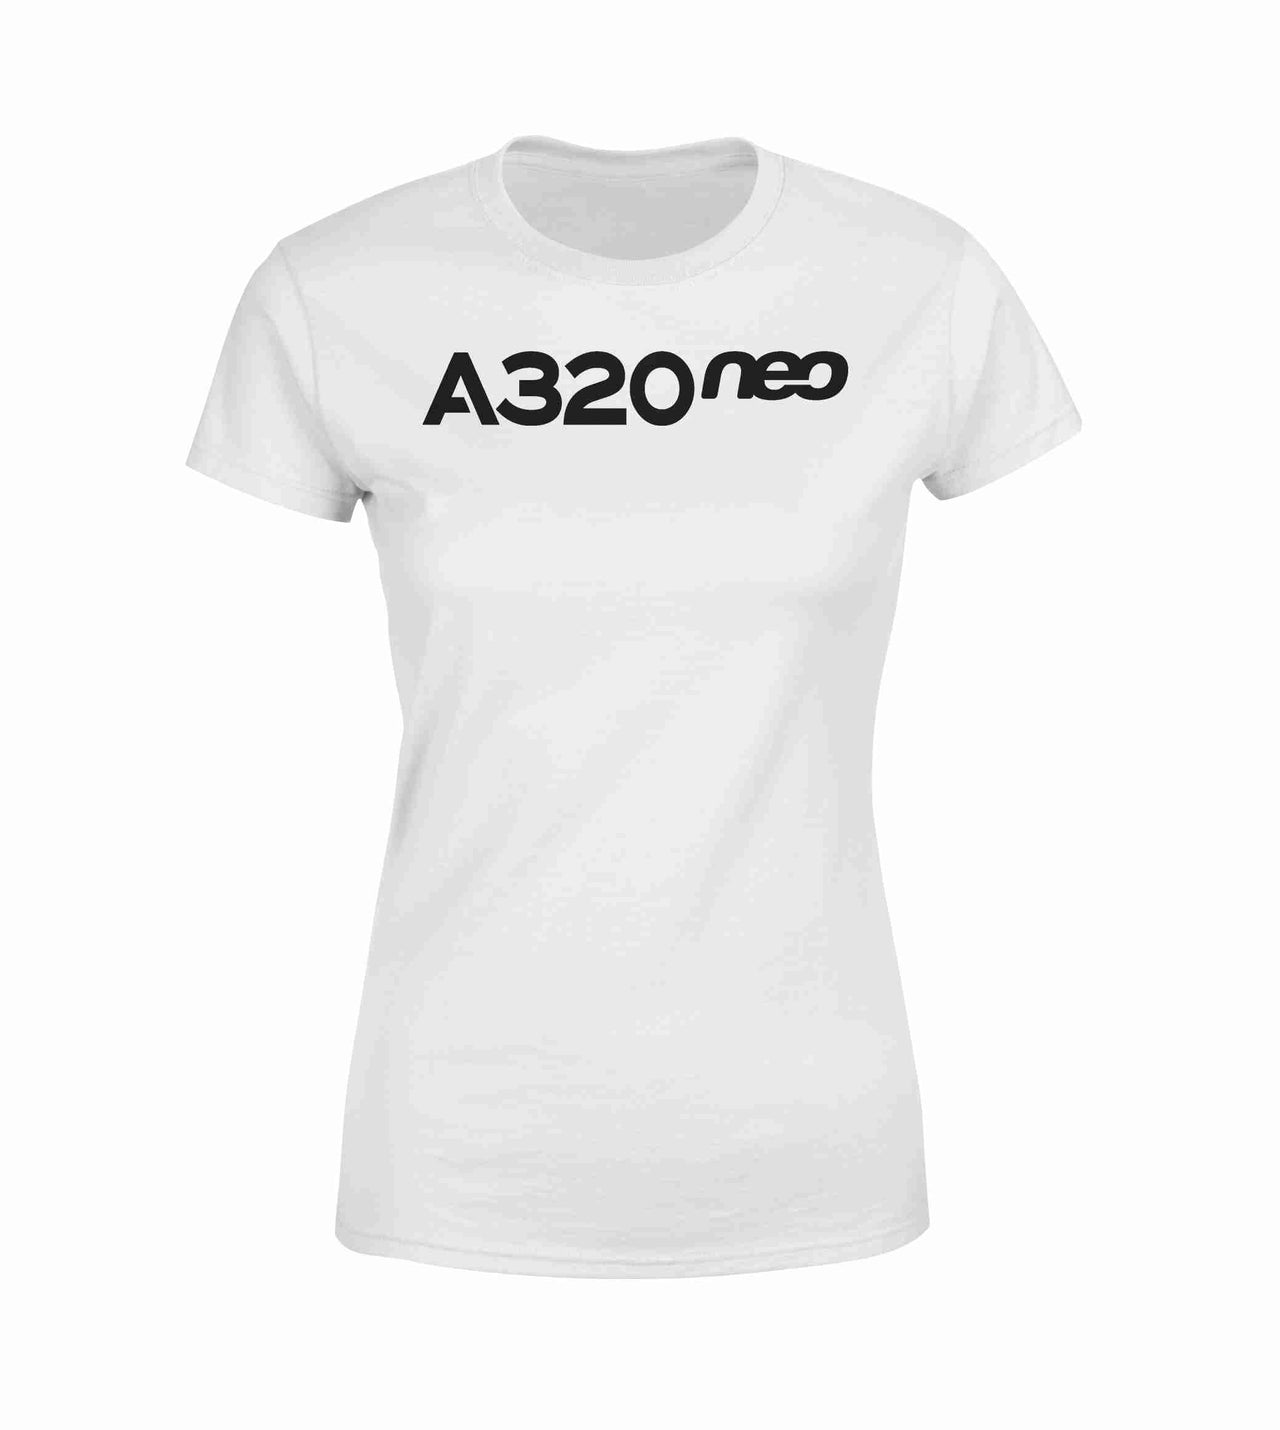 A320neo & Text Designed Women T-Shirts